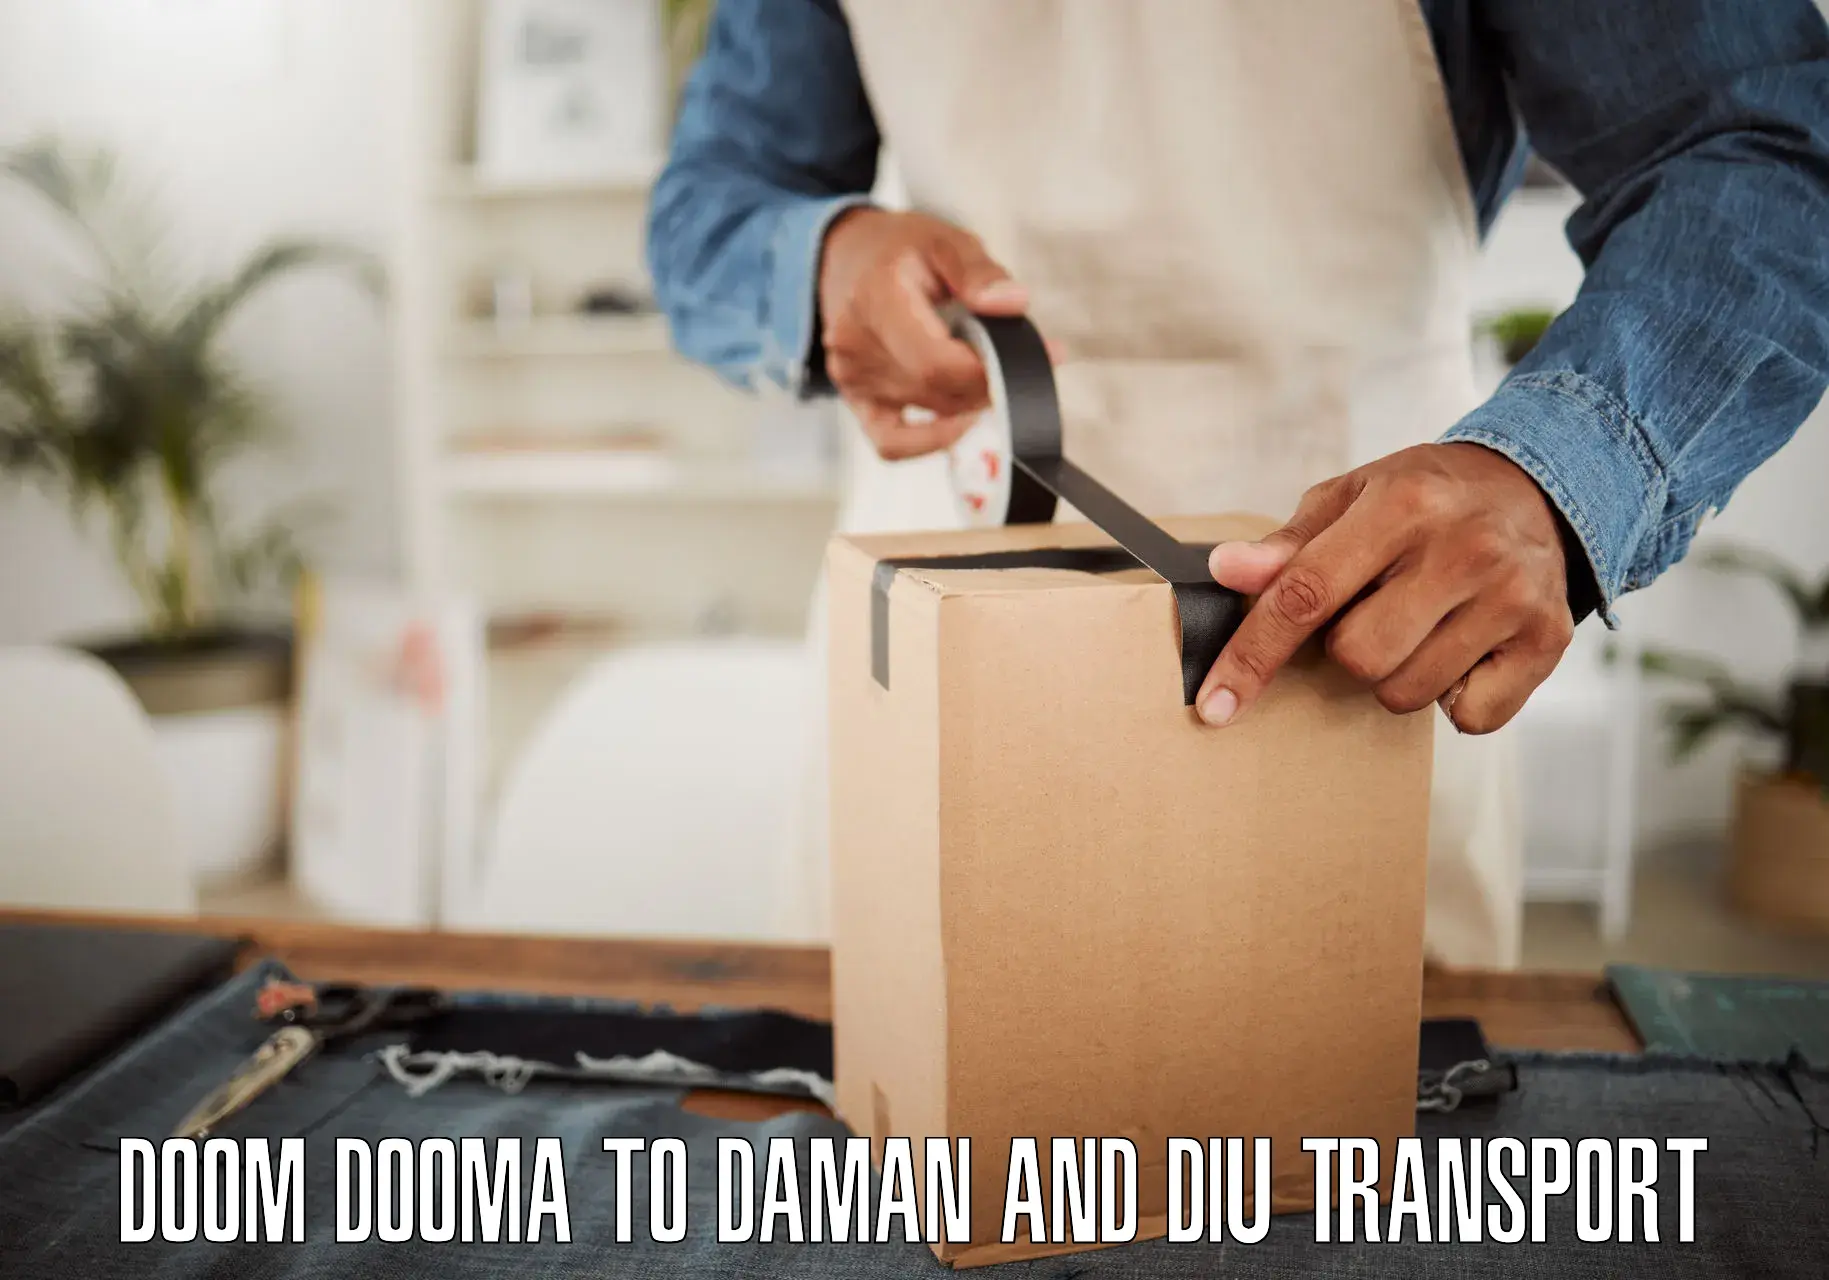 Container transport service Doom Dooma to Diu